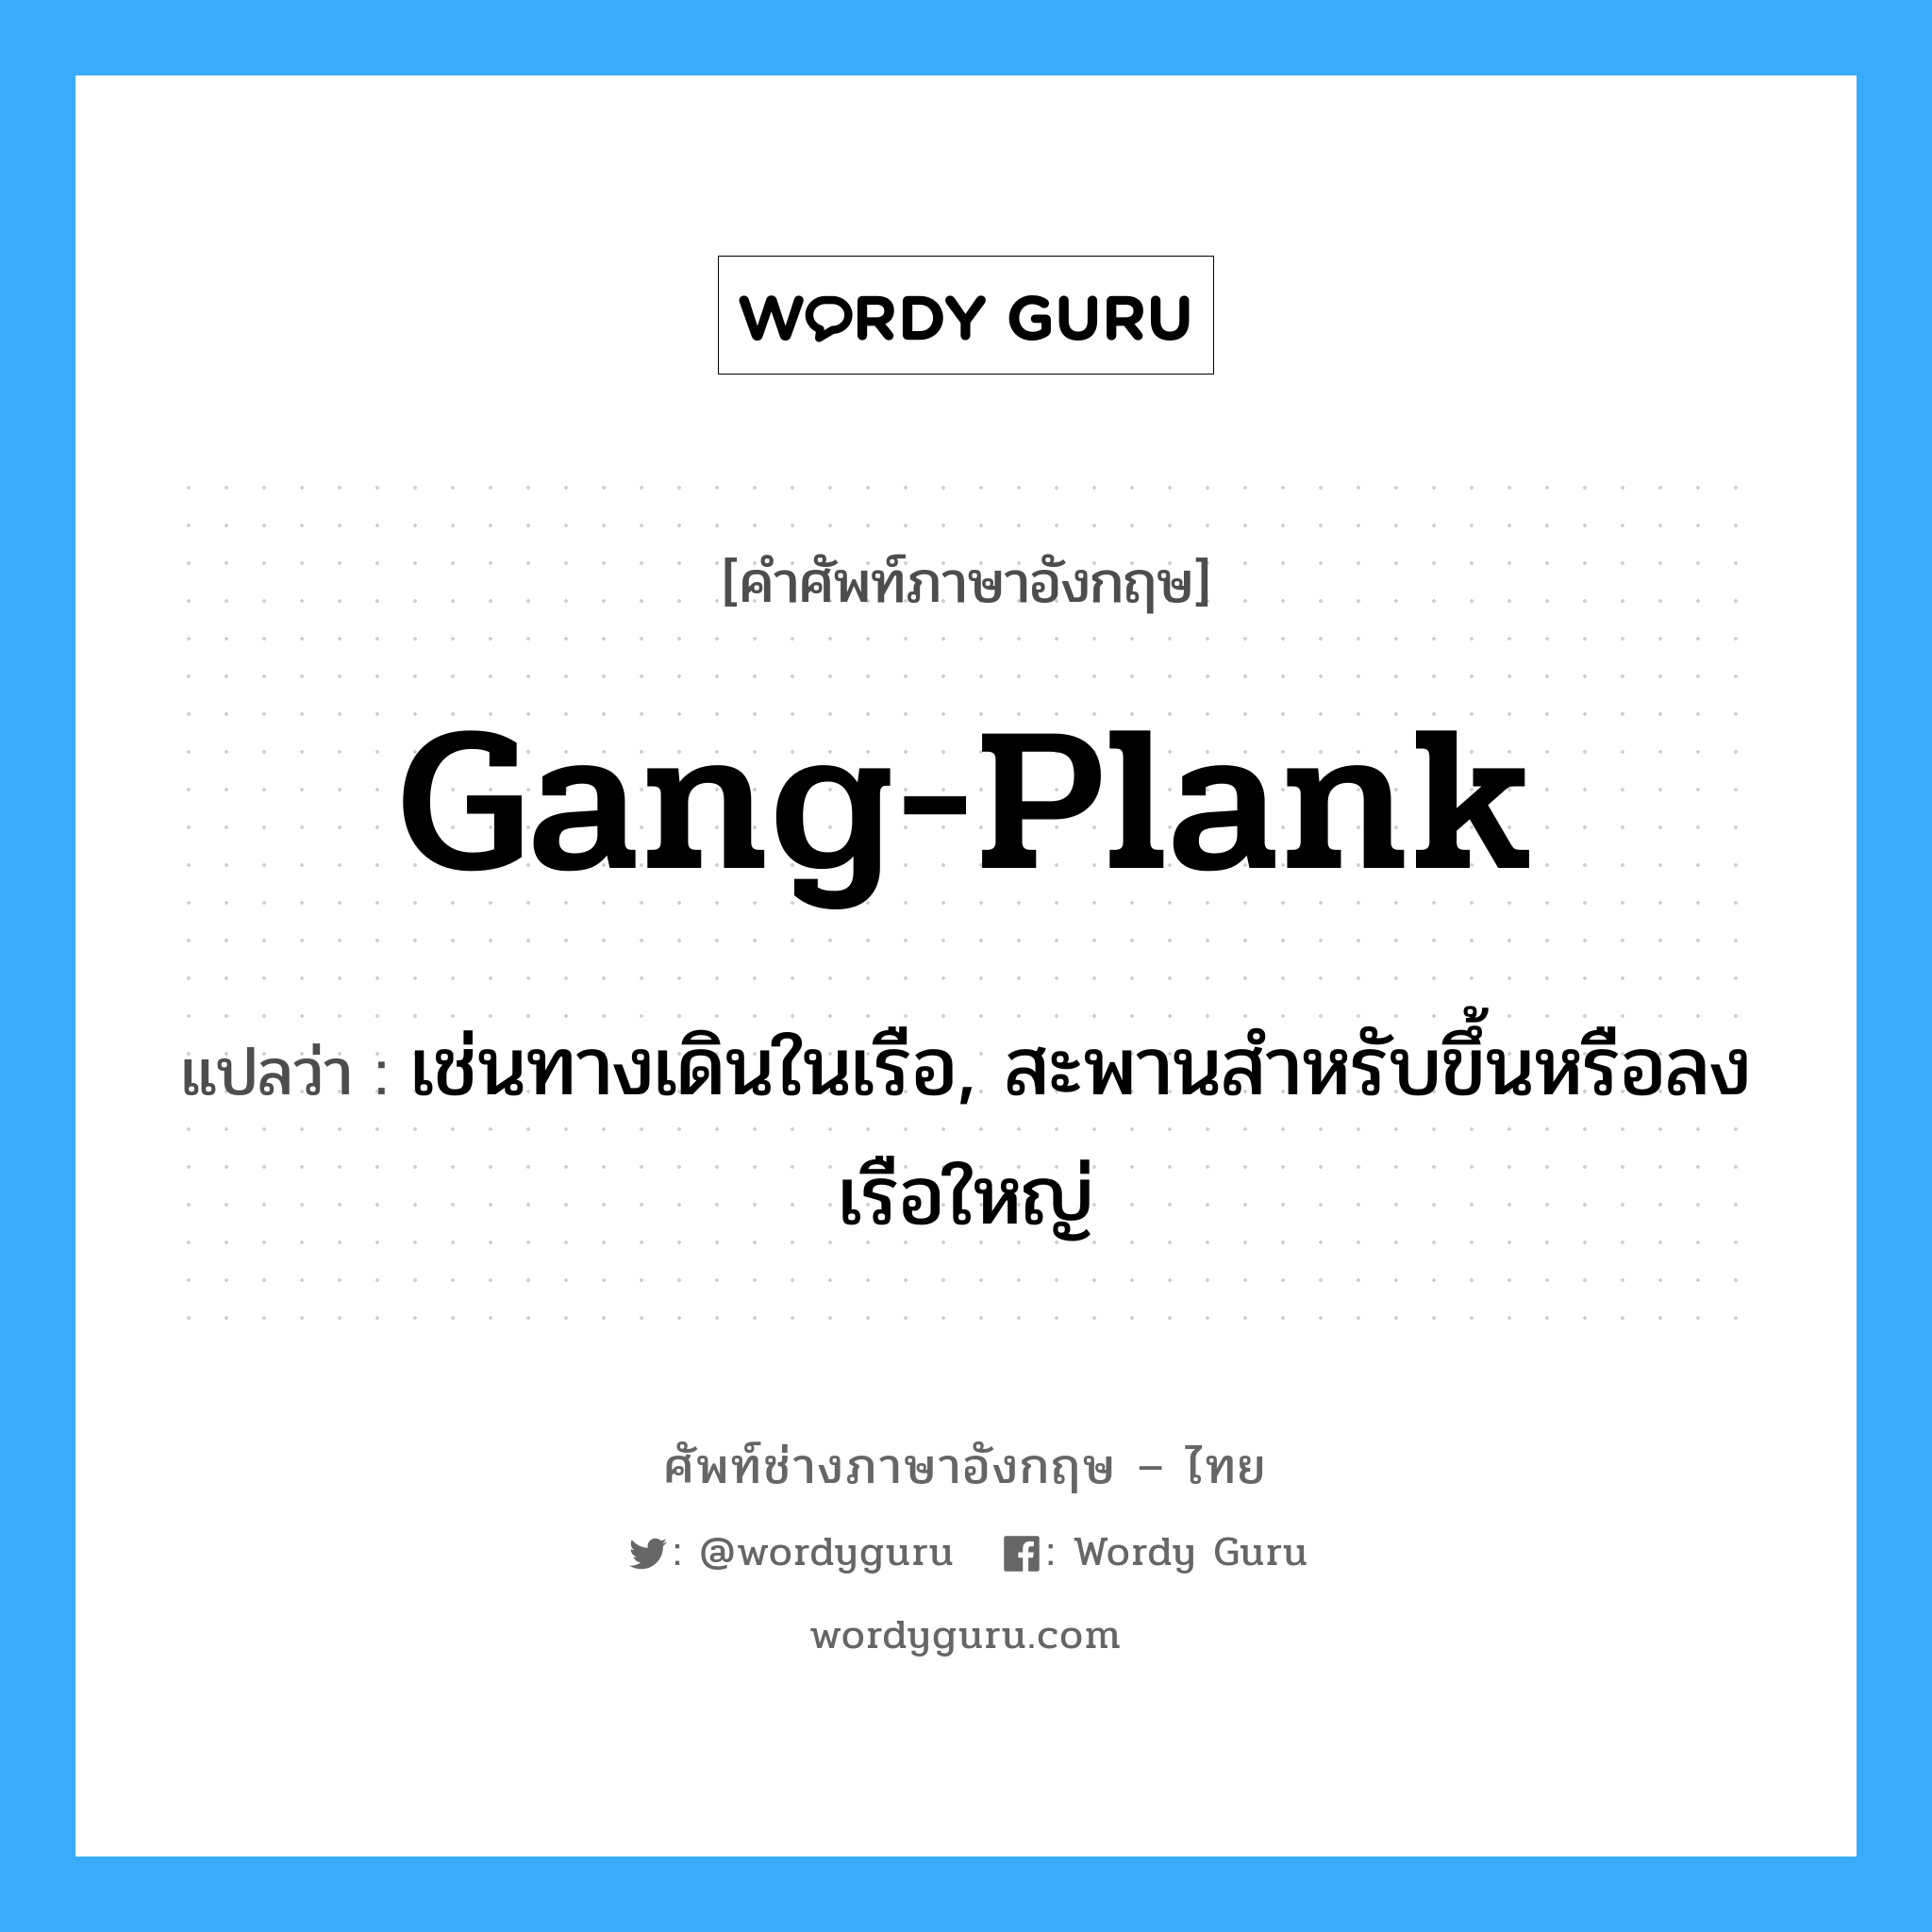 gang-plank แปลว่า?, คำศัพท์ช่างภาษาอังกฤษ - ไทย gang-plank คำศัพท์ภาษาอังกฤษ gang-plank แปลว่า เช่นทางเดินในเรือ, สะพานสำหรับขึ้นหรือลงเรือใหญ่